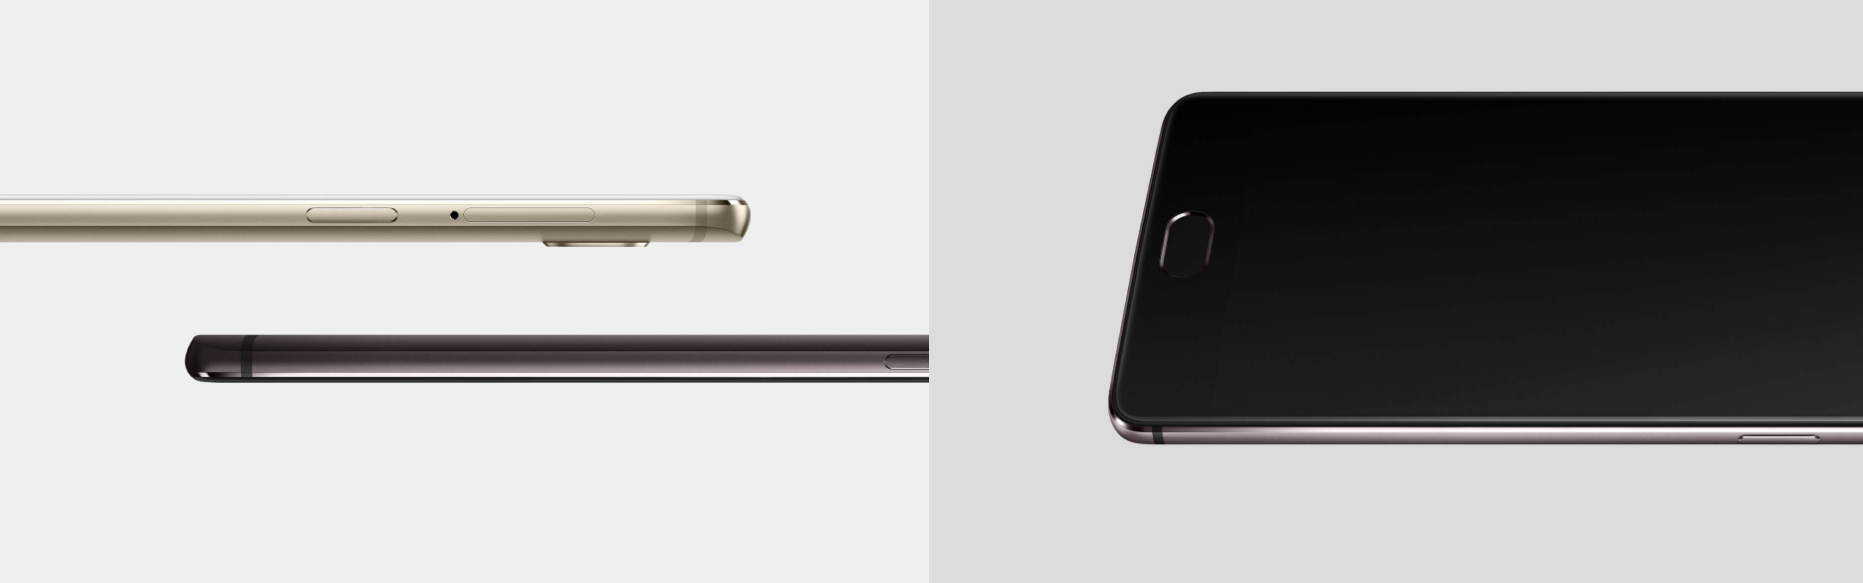 OnePlus3t diseño